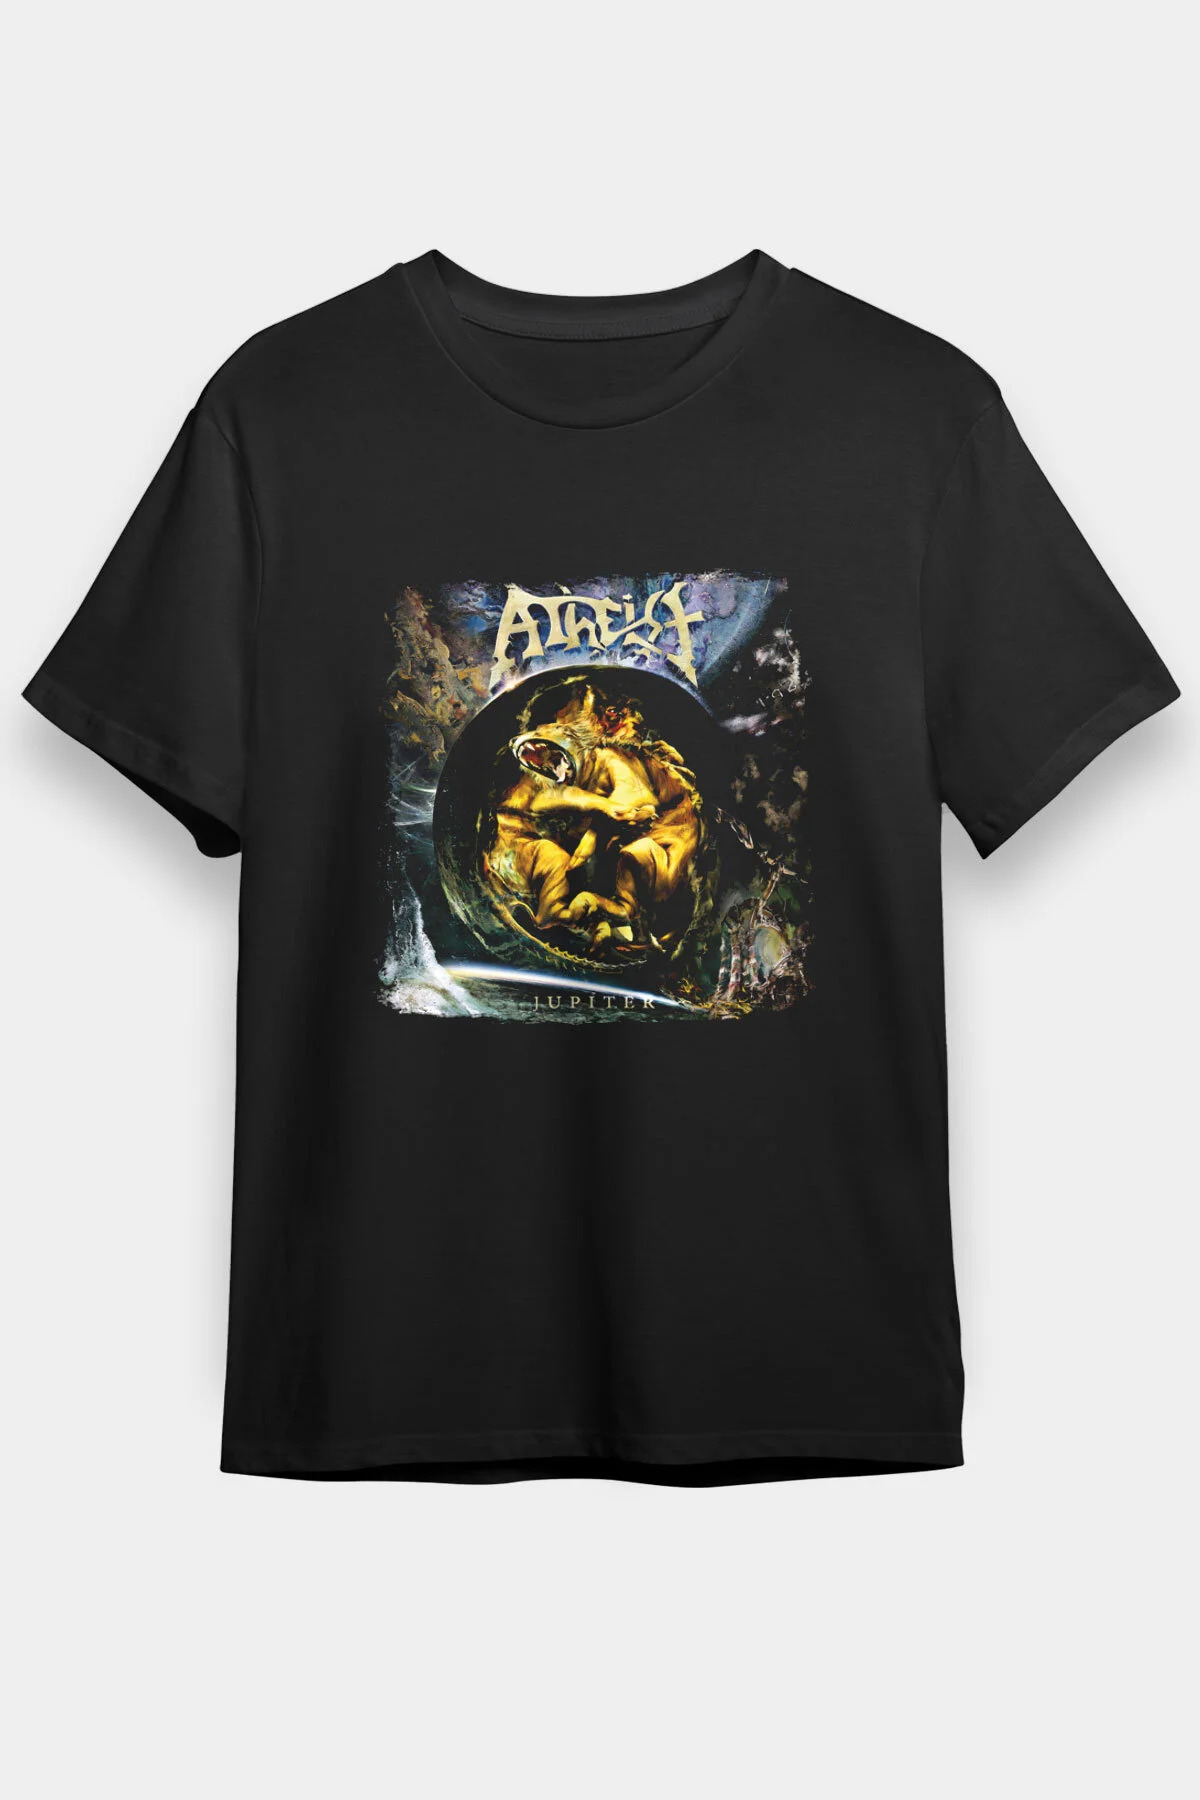 Atheist death metal Band T shirts